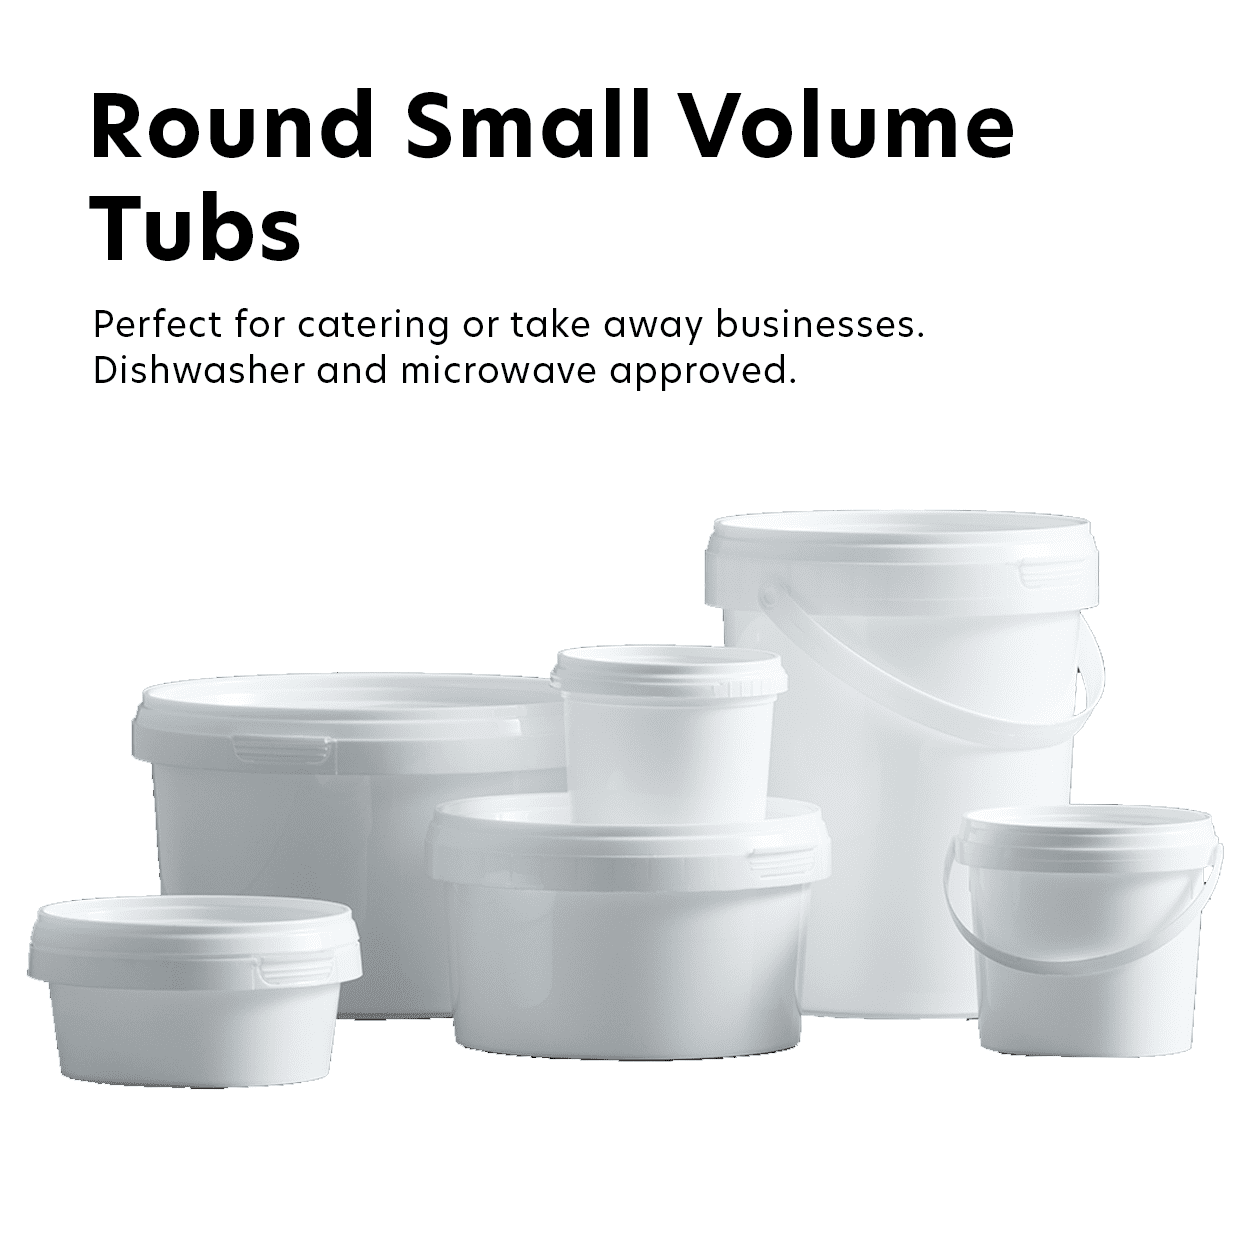 Round Small Volume Tubs